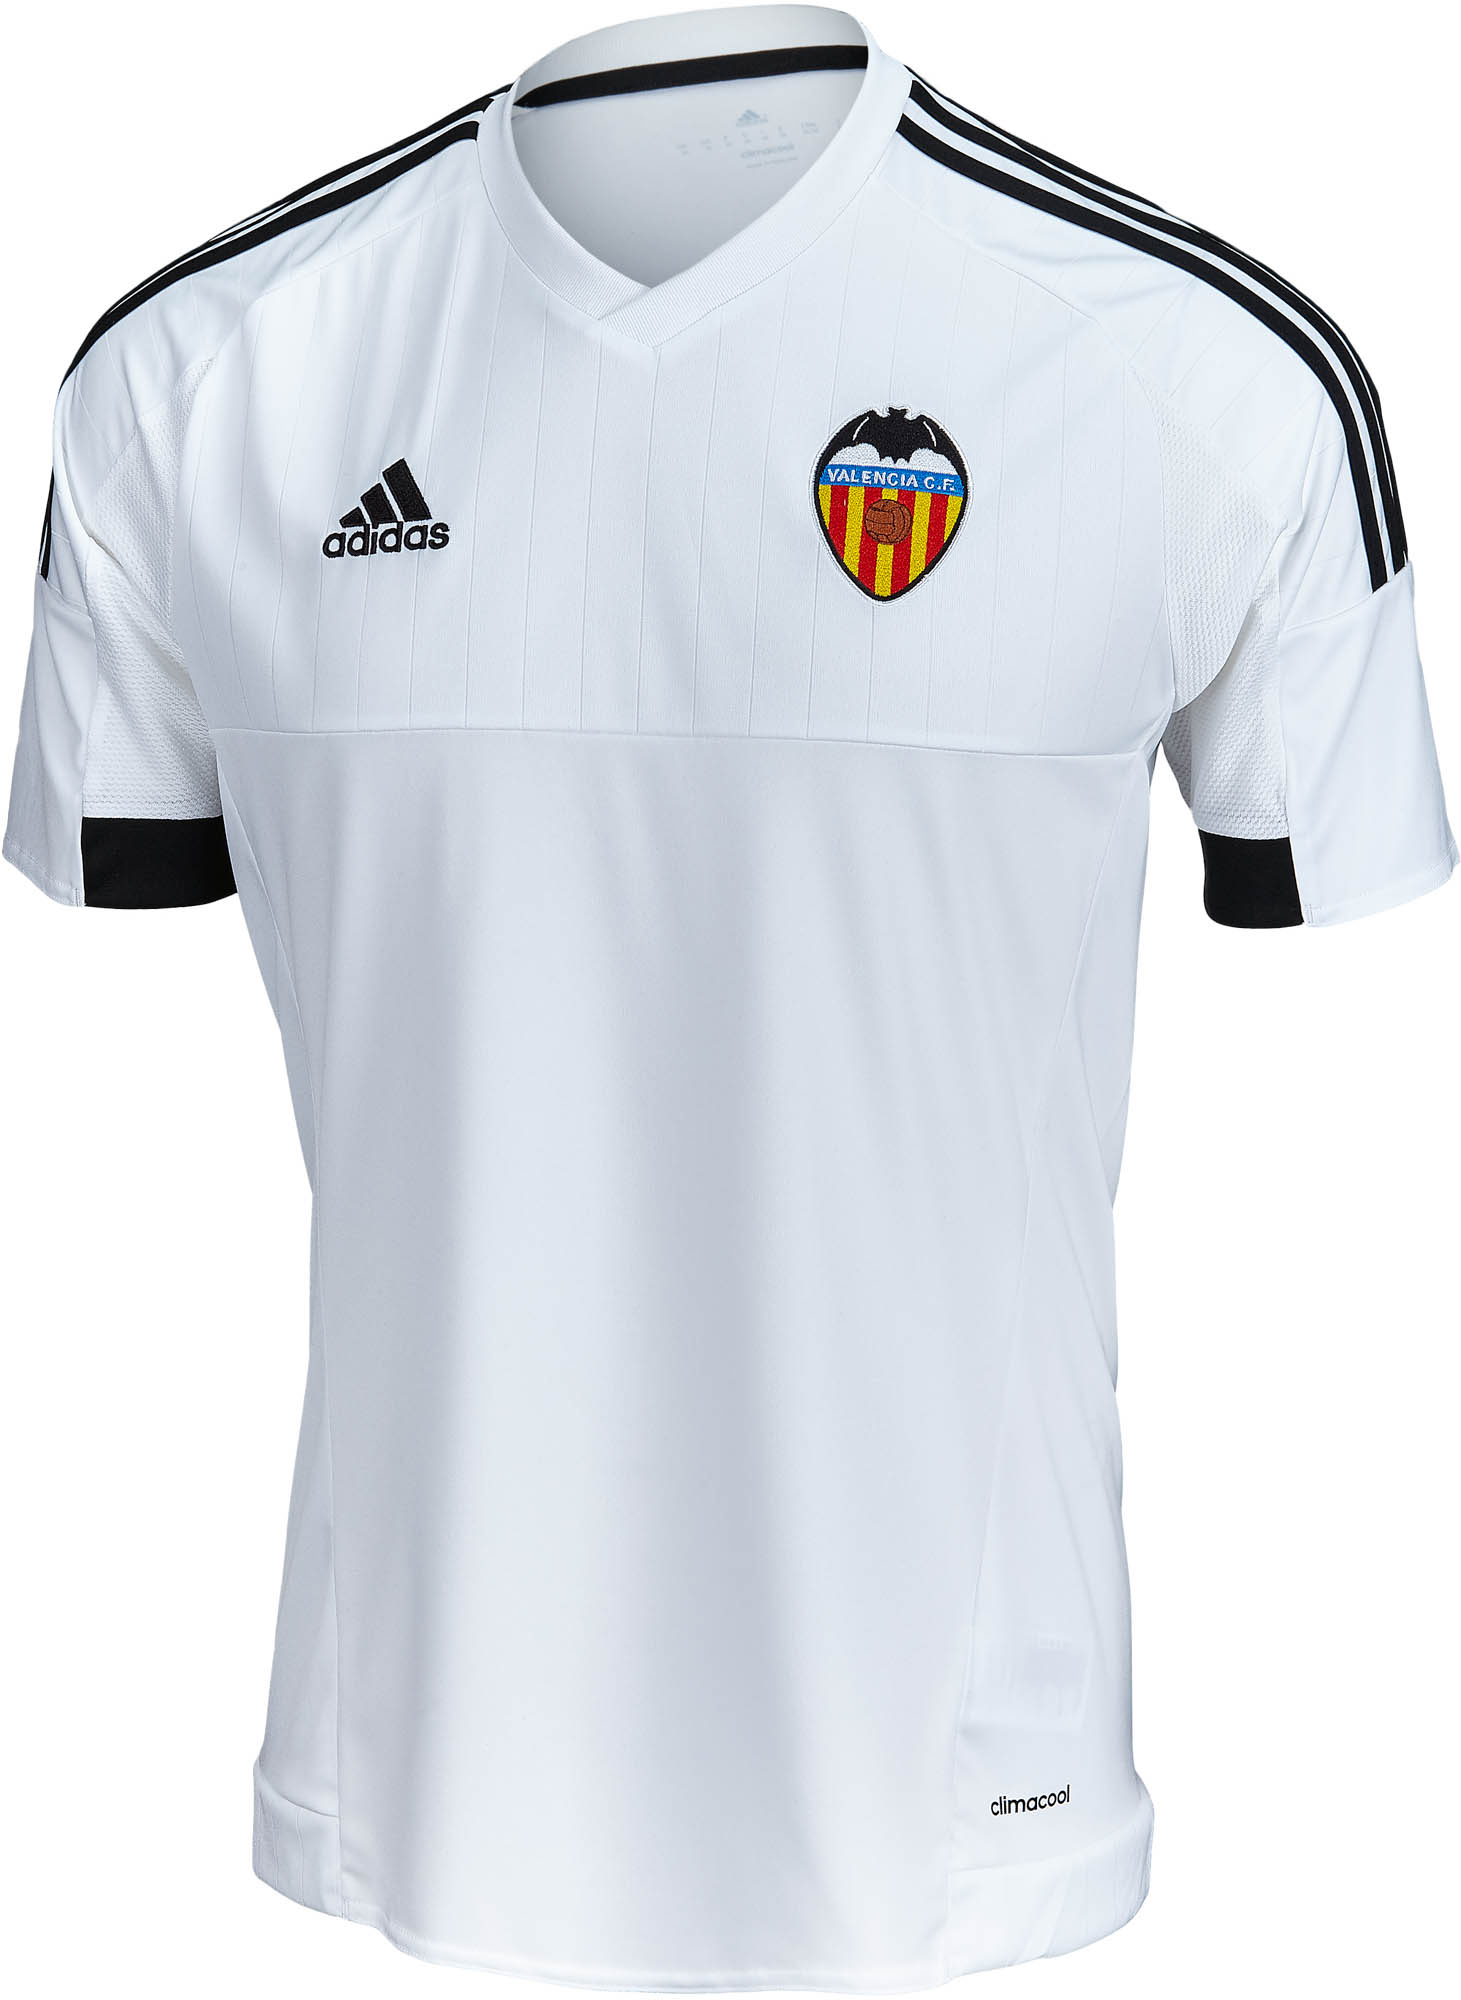 adidas Valencia Home Jersey - 2015/16 La Liga Jerseys